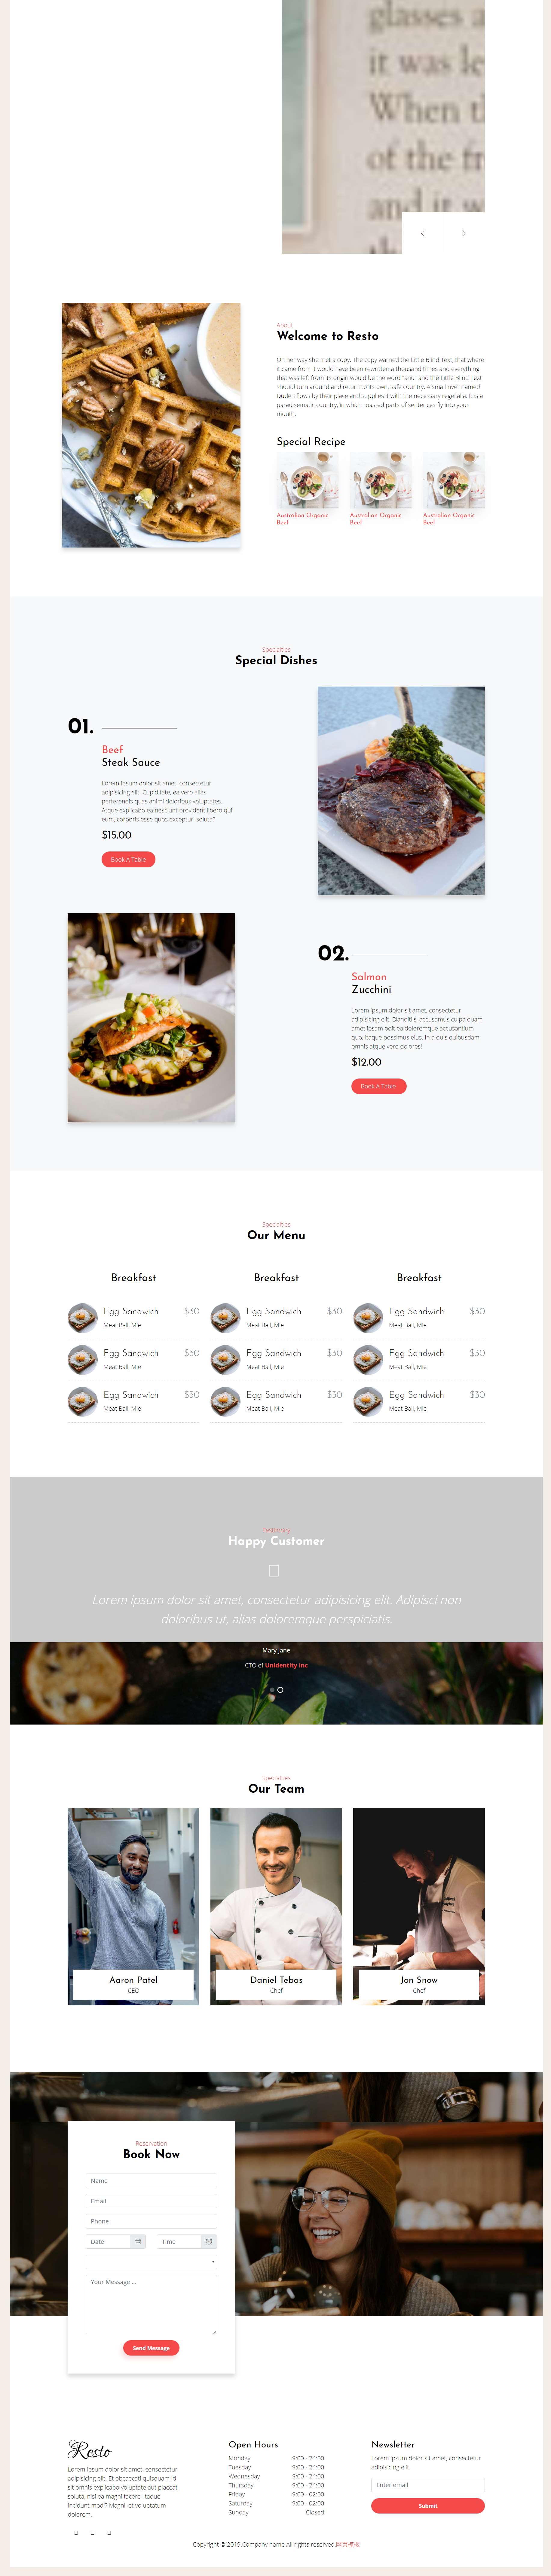 bootstrap红色欧美样式餐厅美食网页模板代码下载